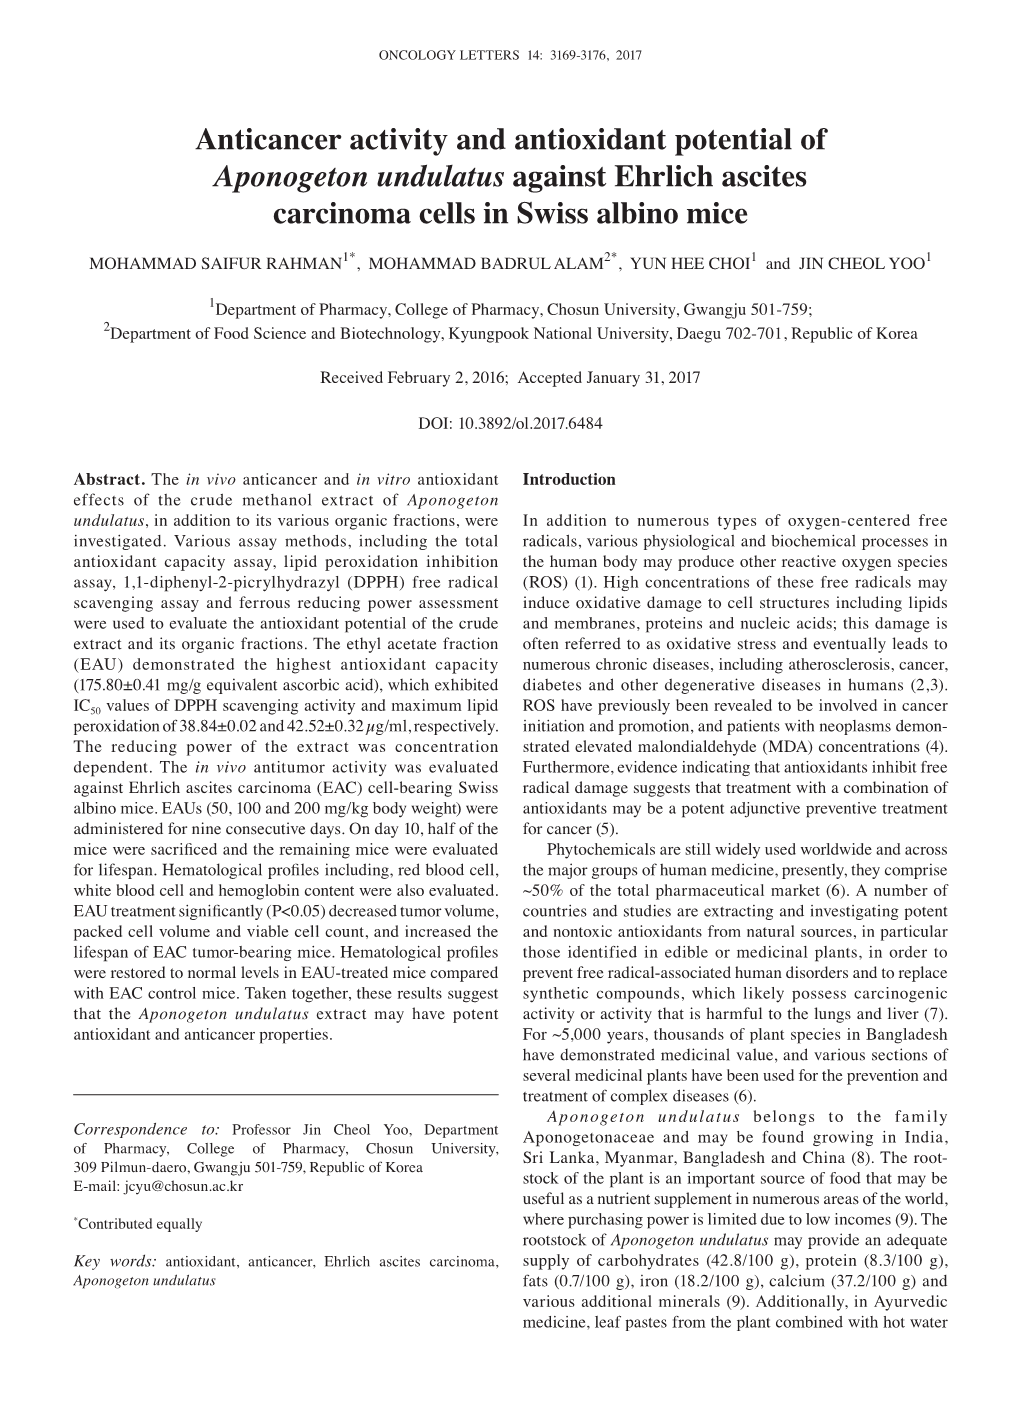 Anticancer Activity and Antioxidant Potential of Aponogeton Undulatus Against Ehrlich Ascites Carcinoma Cells in Swiss Albino Mice